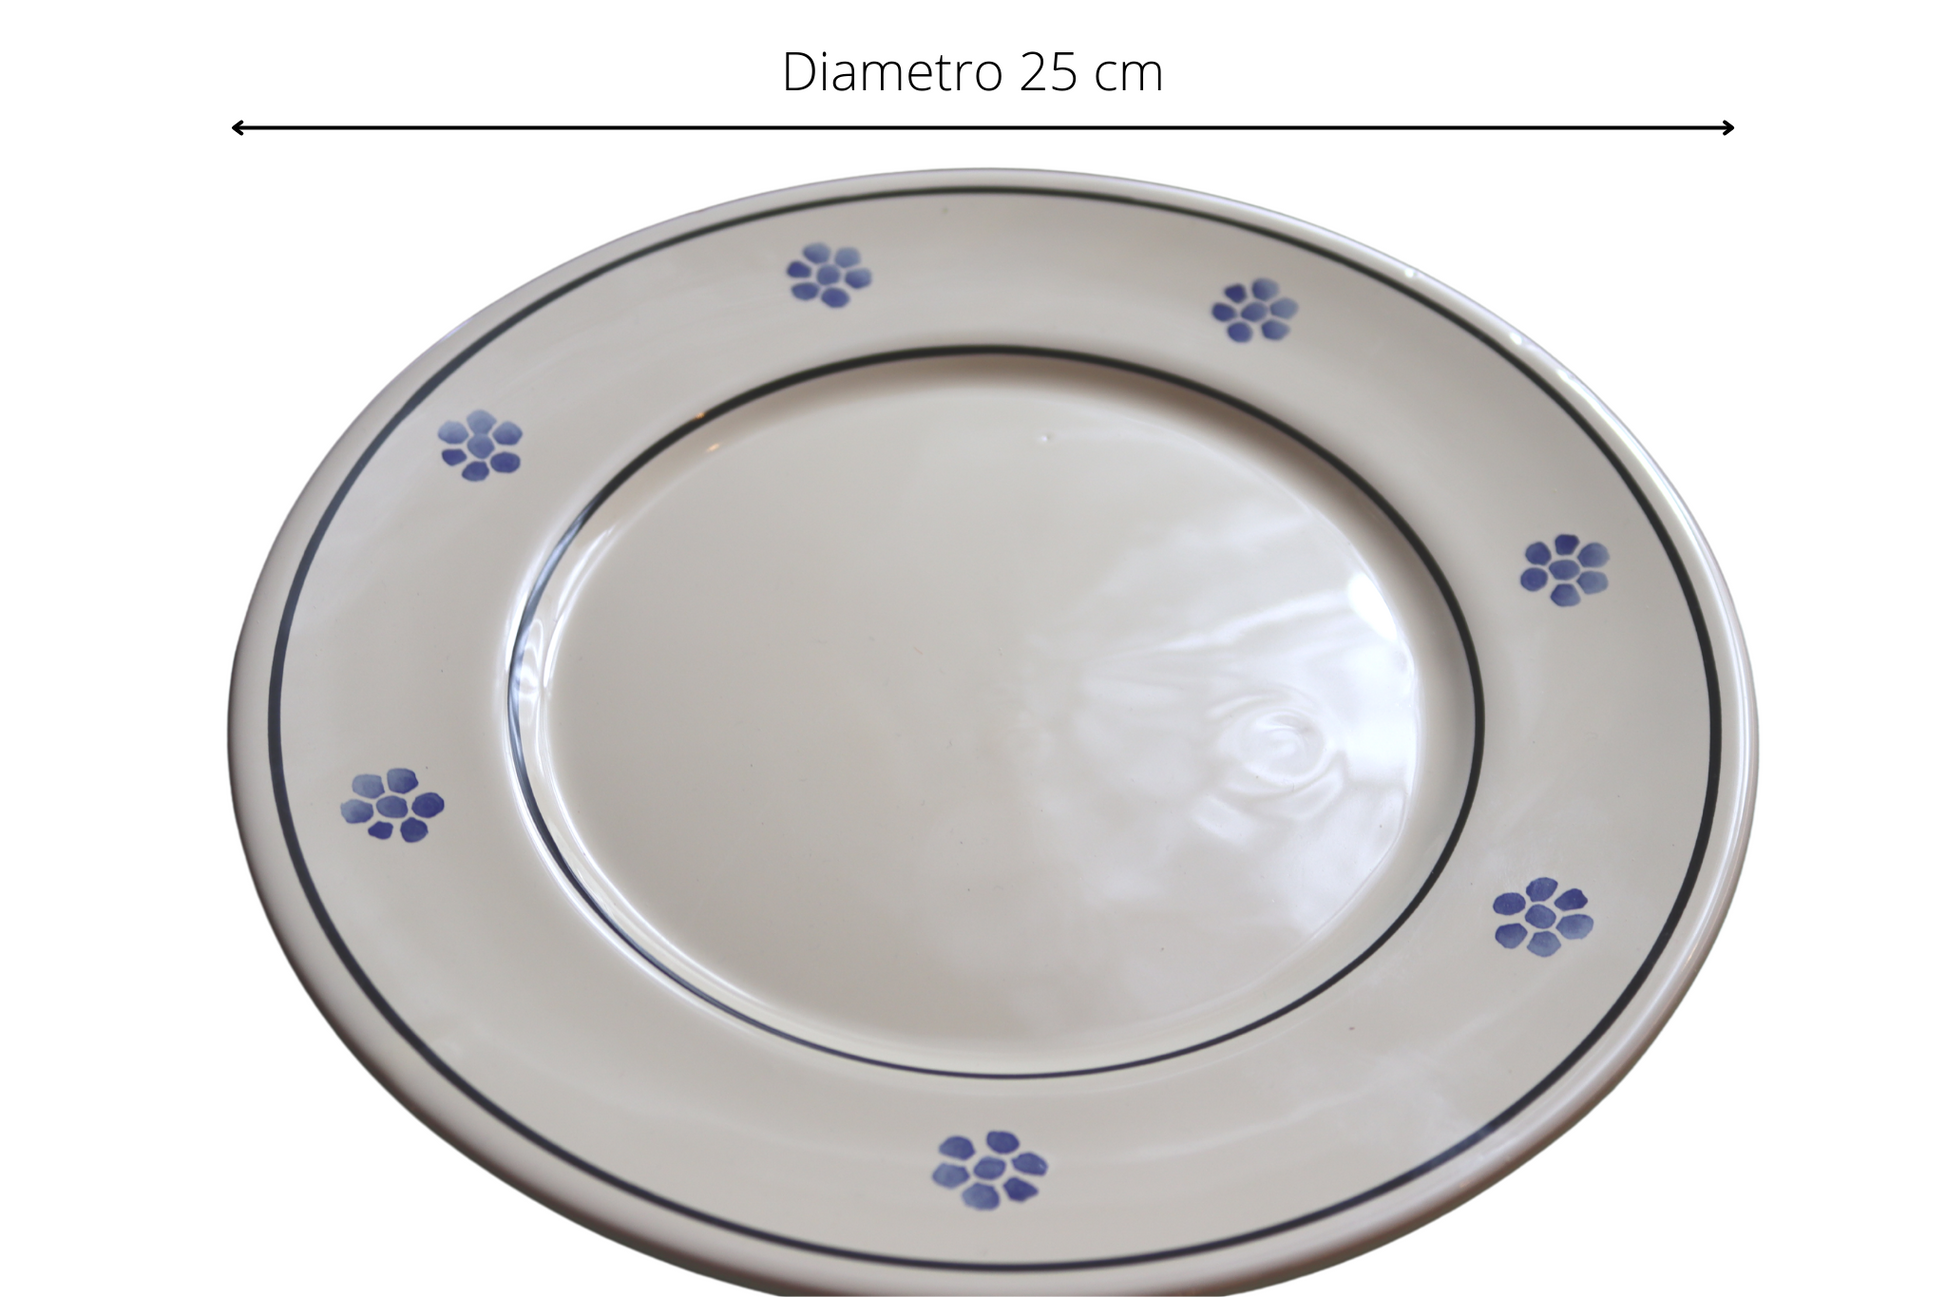 piatti in ceramica tipici